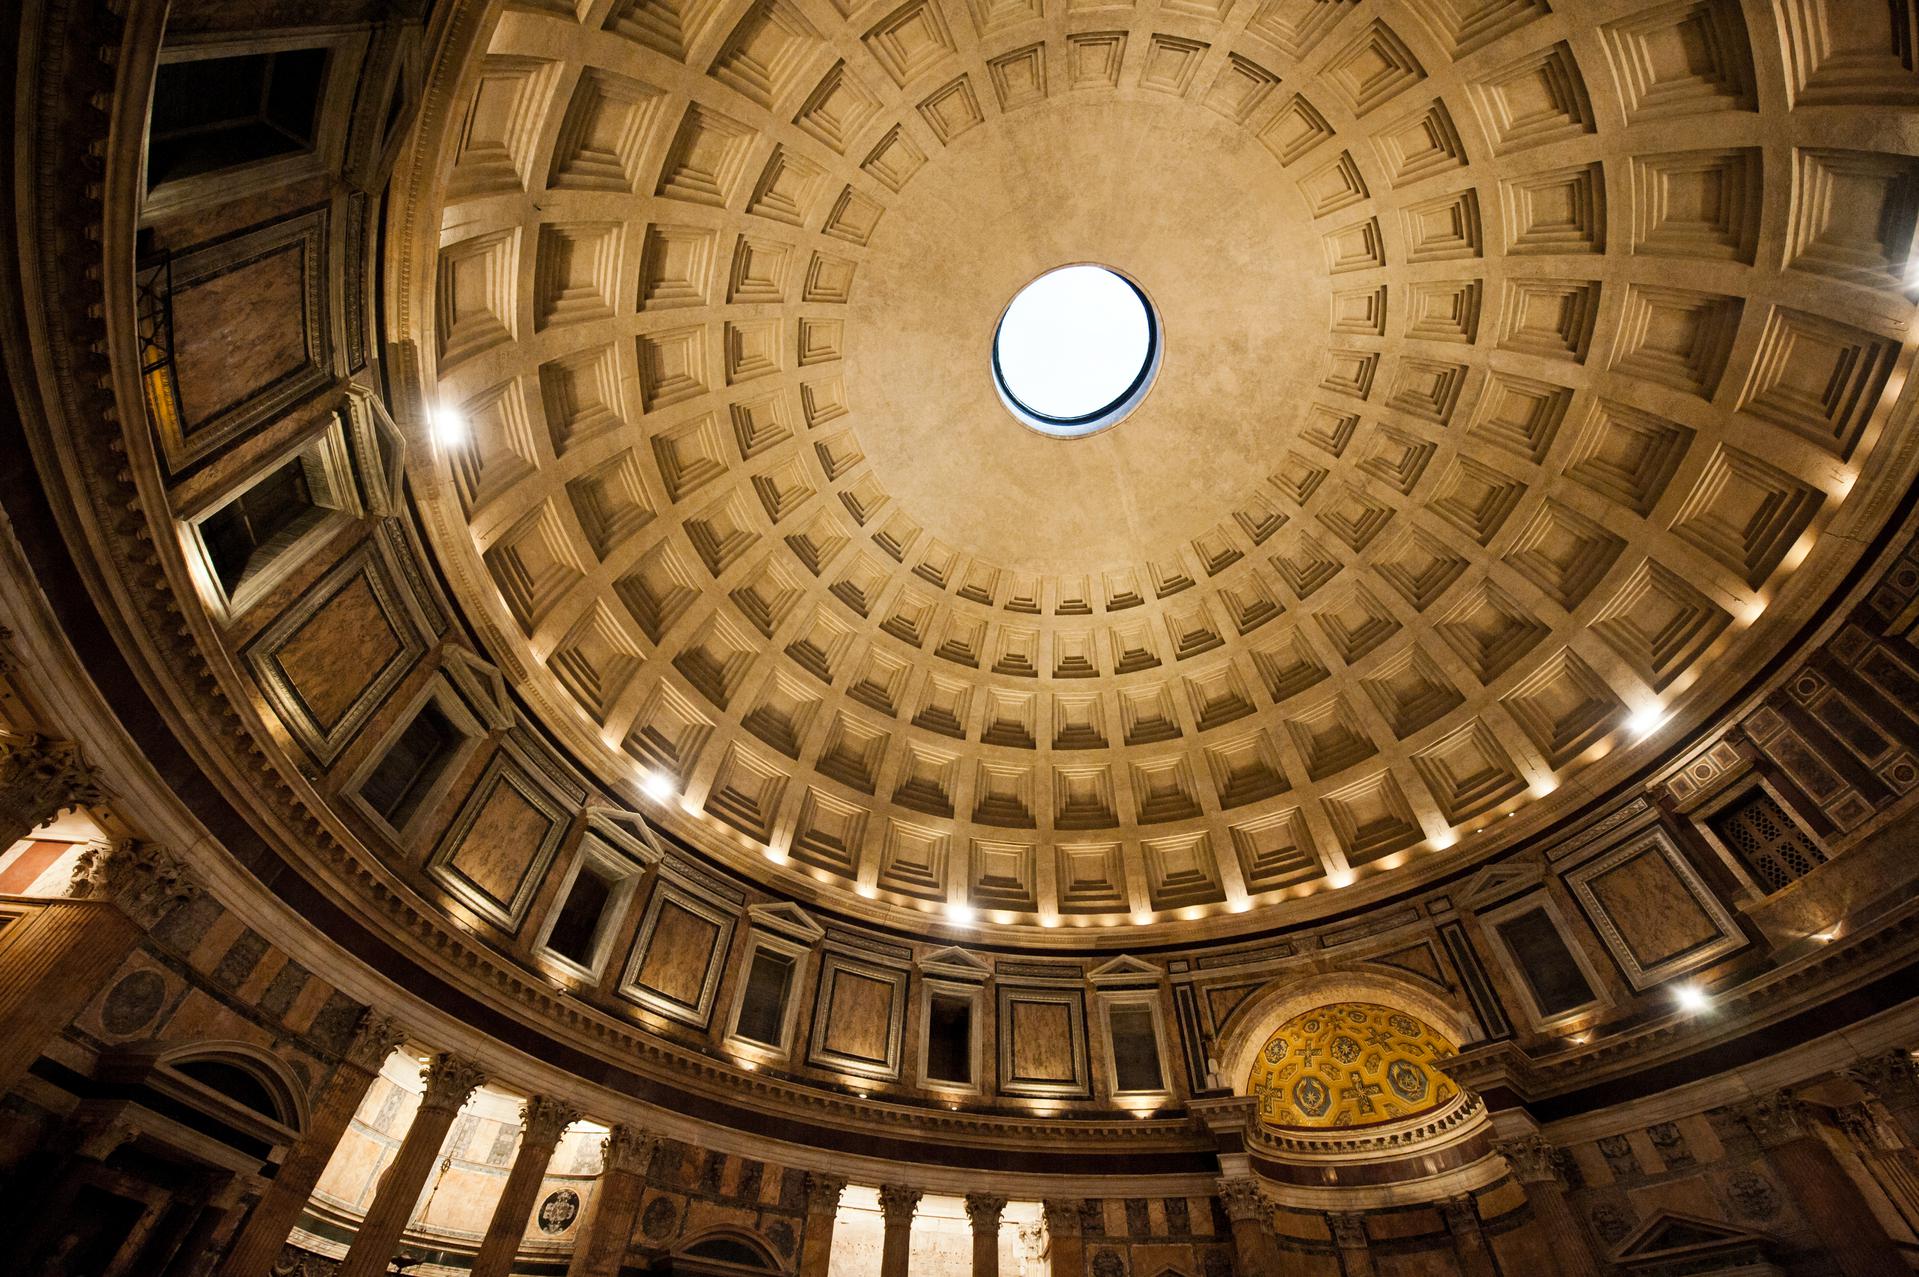 The Oculus in Massive Concrete Dome lights the Rotunda Below.